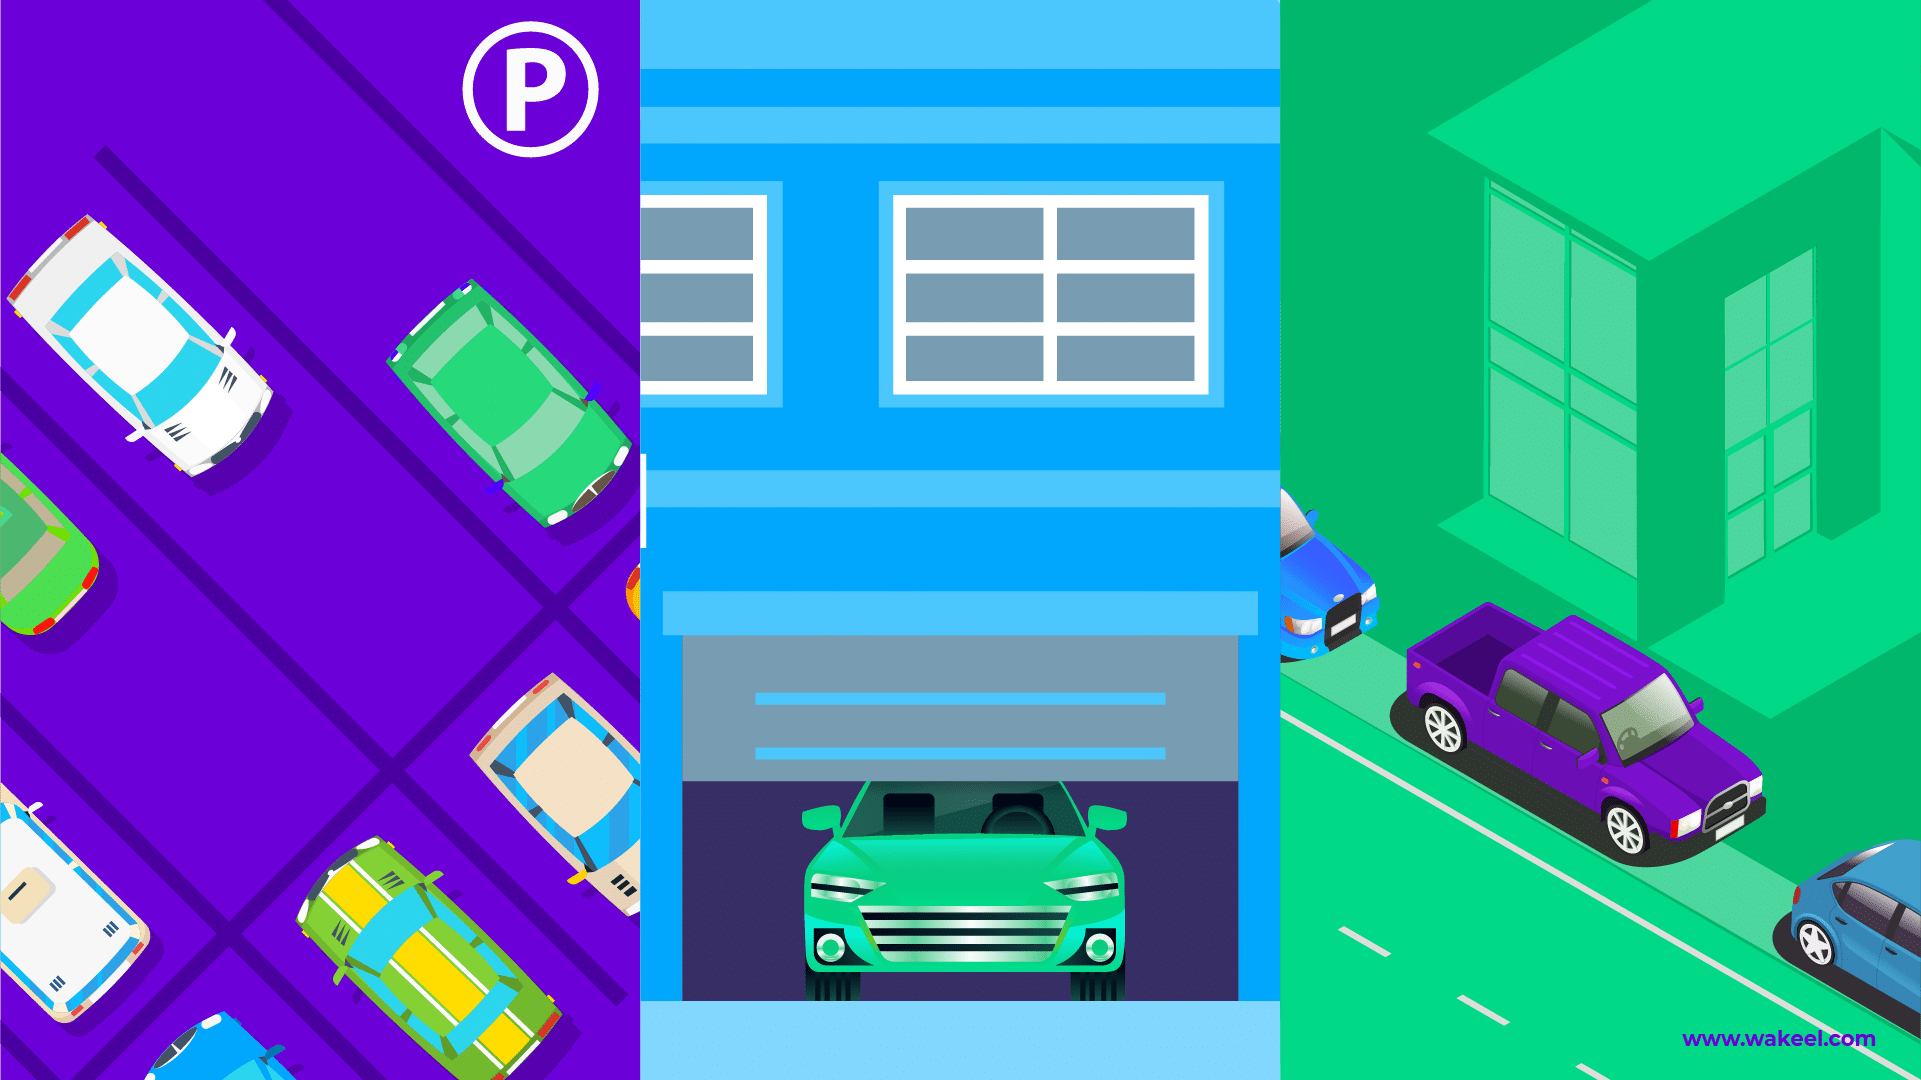 Where Should You Park Your Car